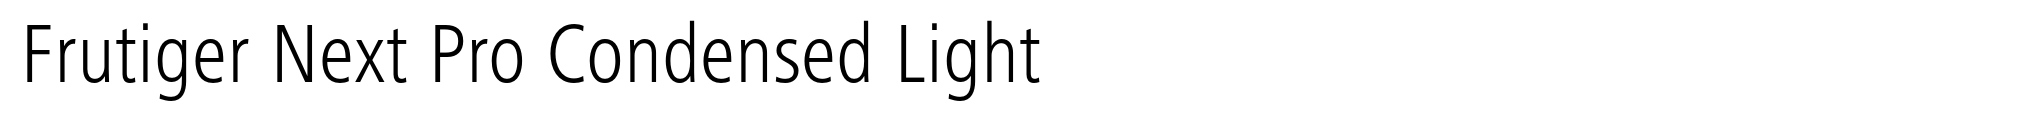 Frutiger Next Pro Condensed Light image